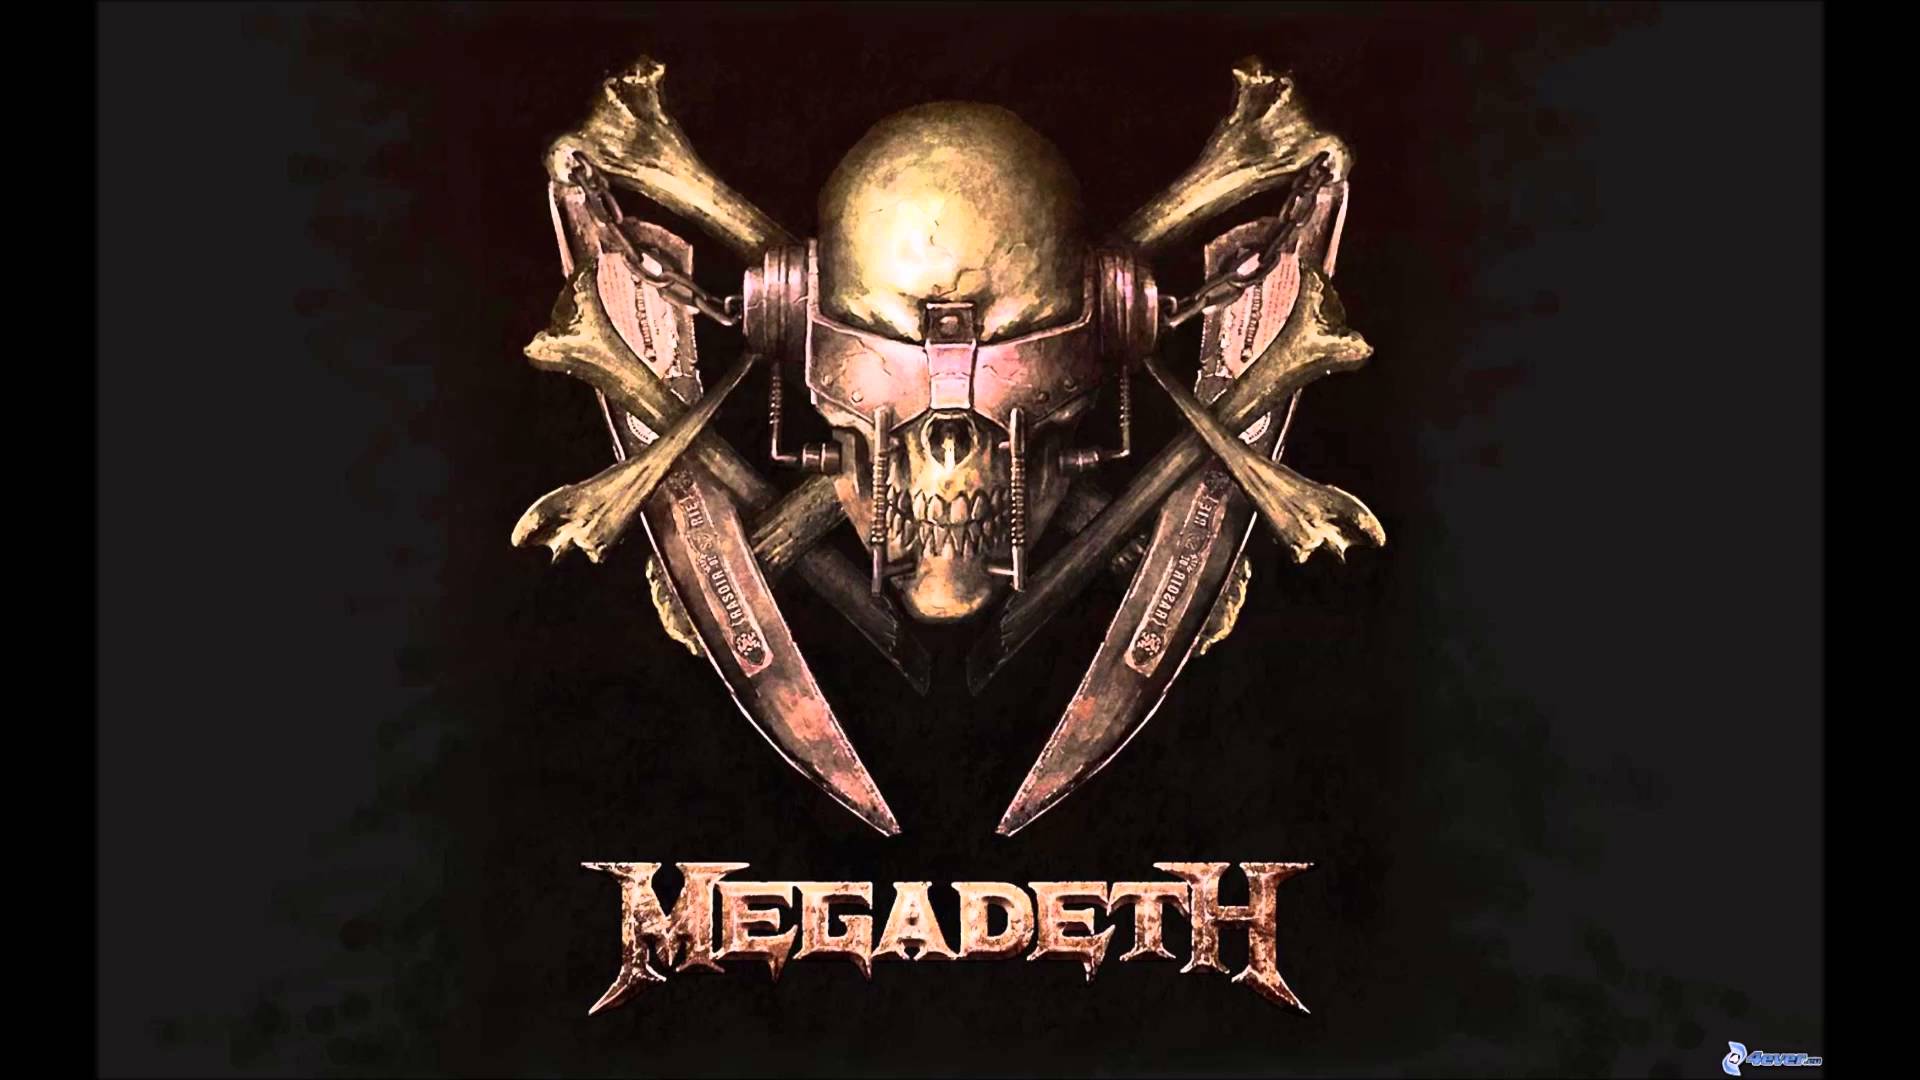 Megadeth sells (Instrumental)